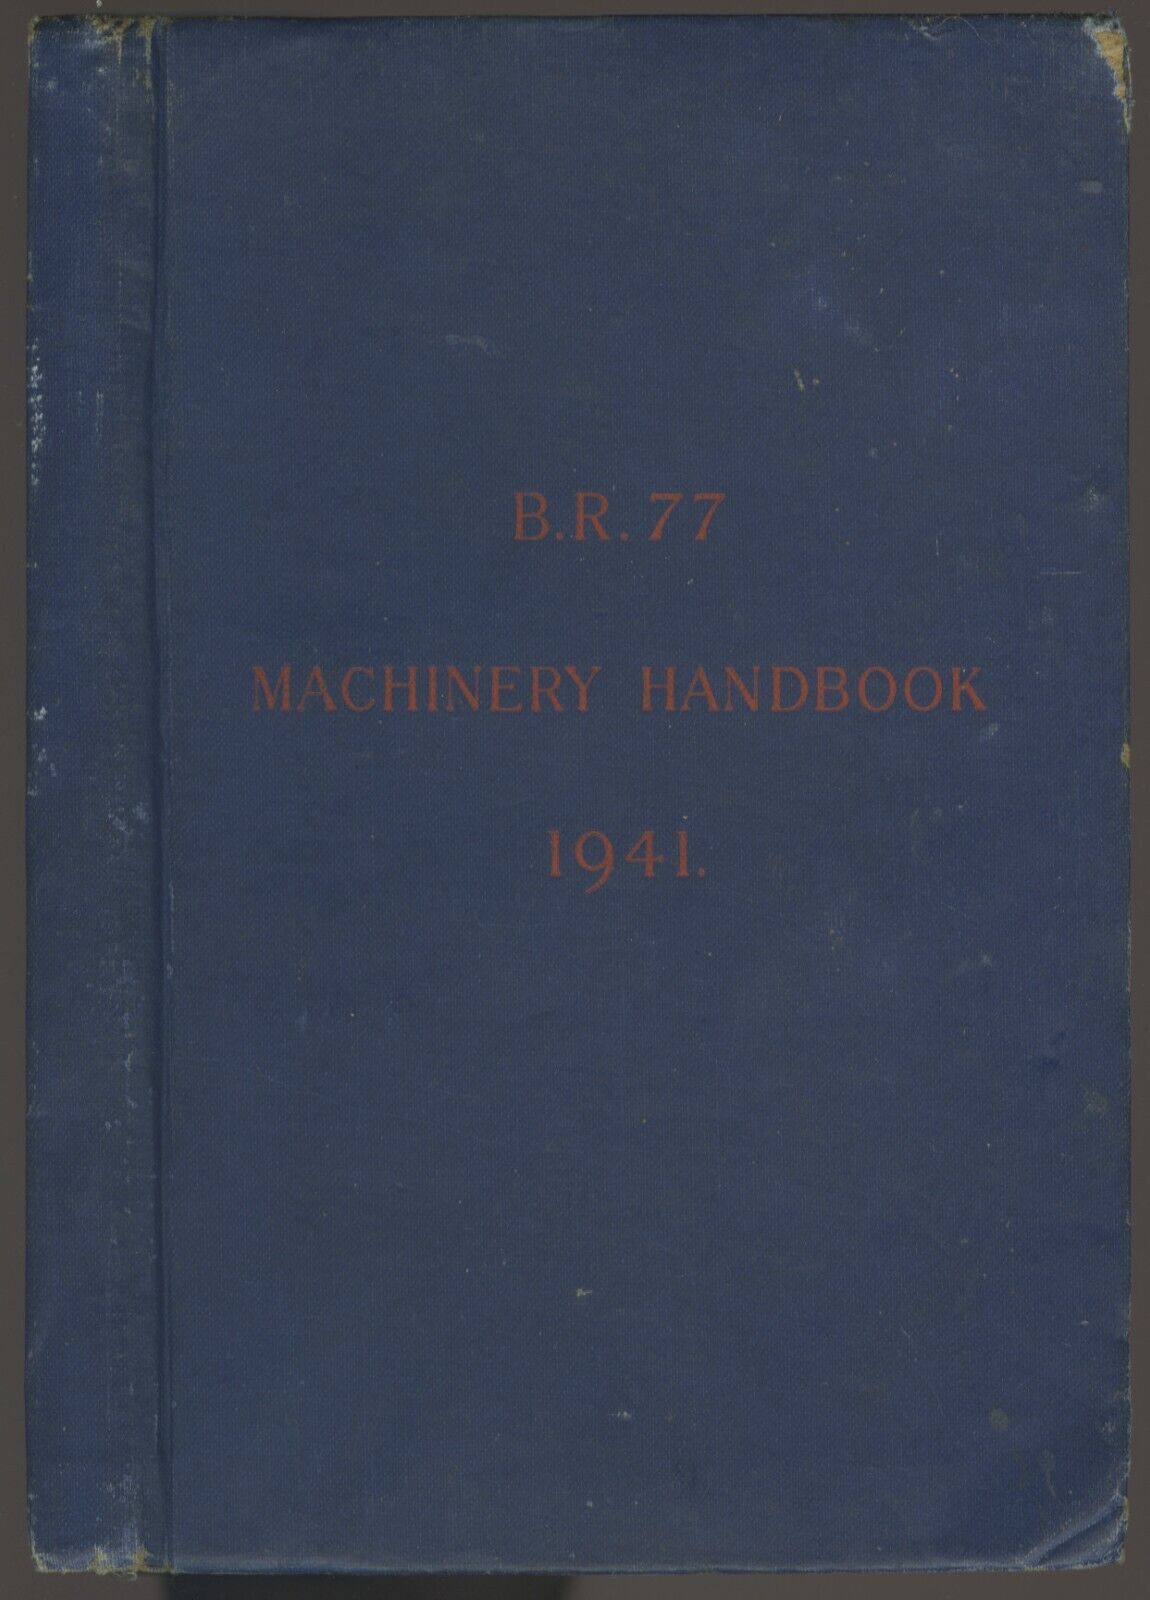 NAVAL MANUAL BR 77 MACHINERY HANDBOOK Pub 1941